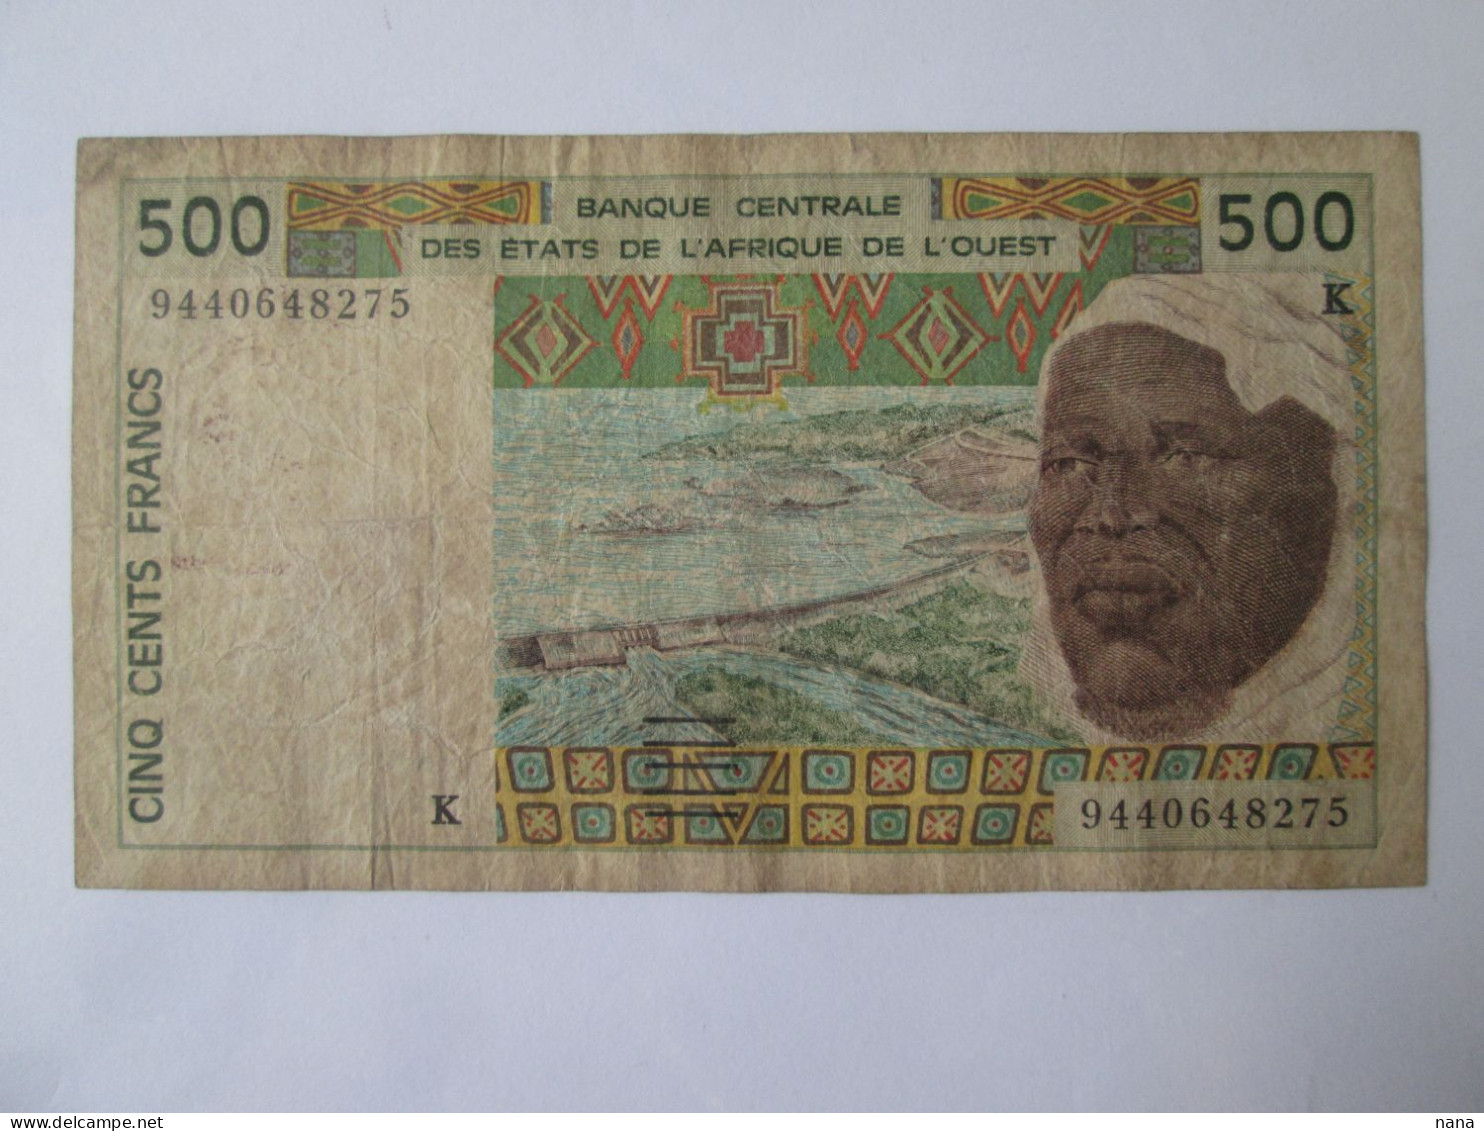 Senegal 500 Francs 1995 Banknote,see Pictures - Senegal